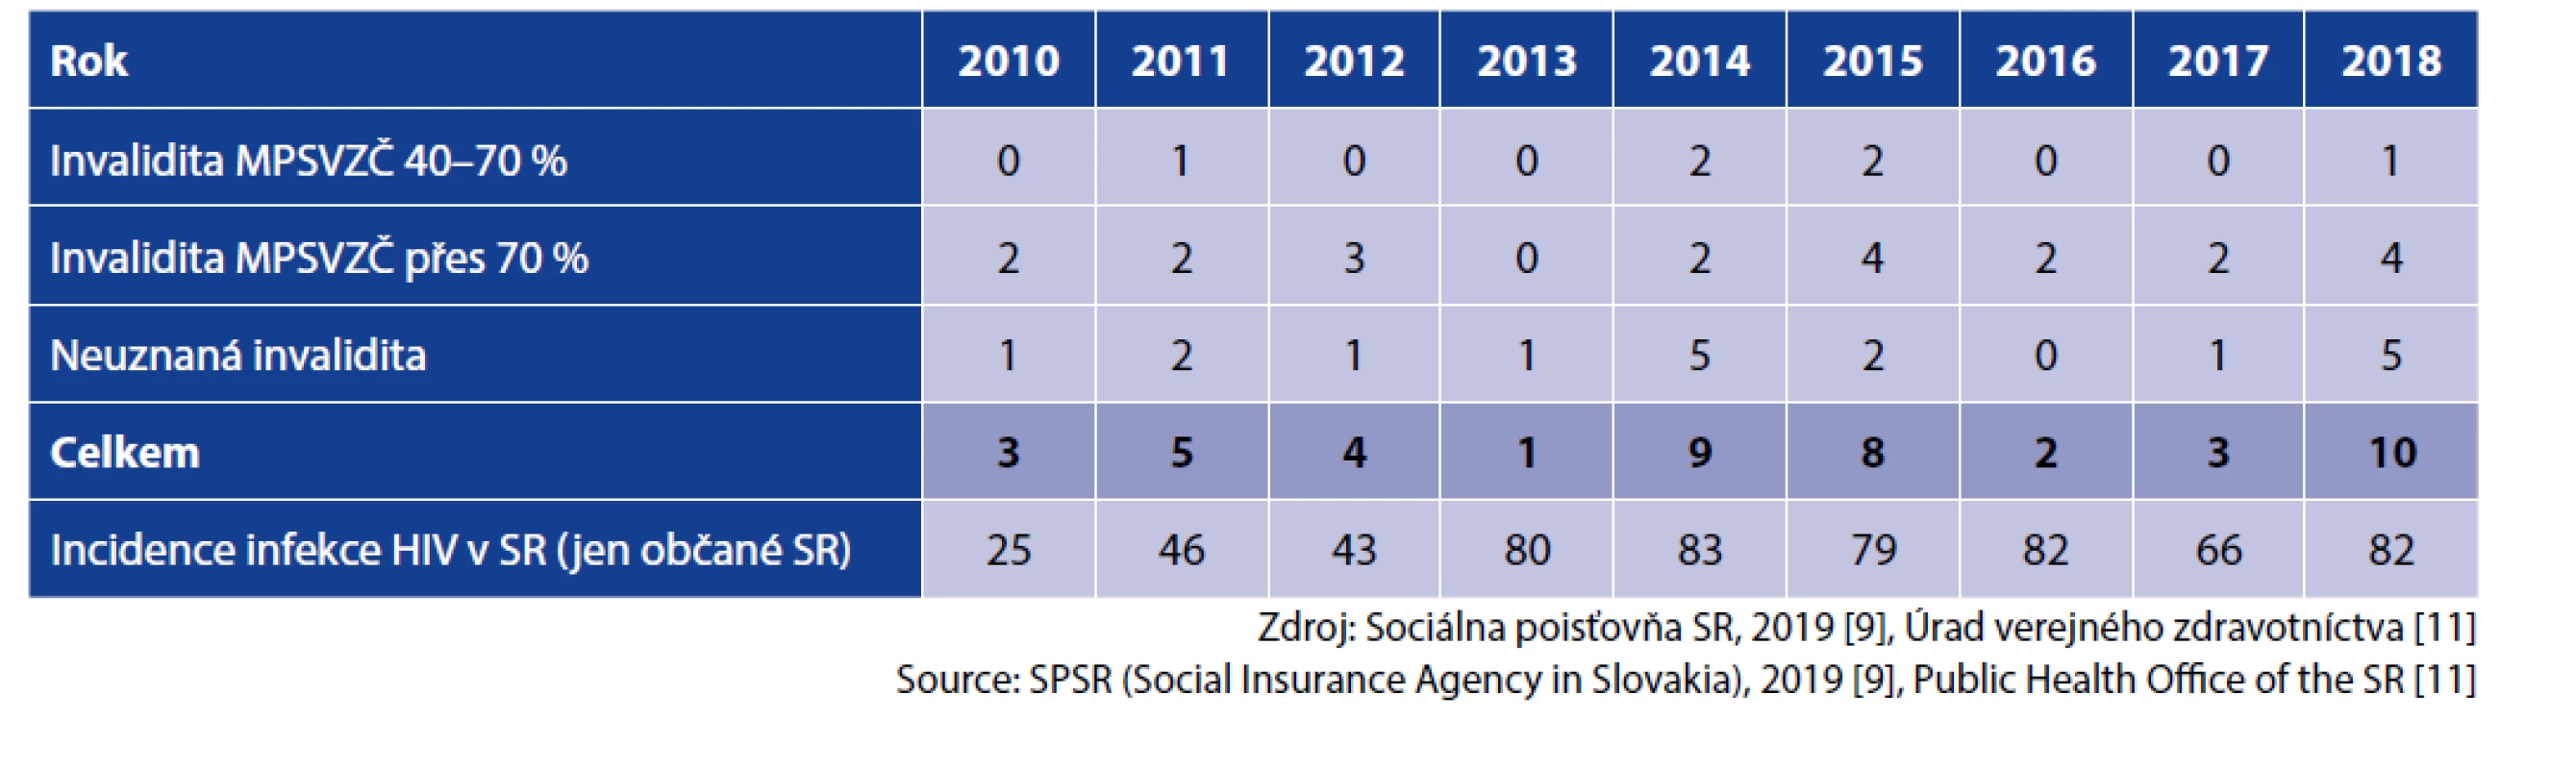 Incidence invalidity pro HIV infekci na Slovensku 2010–2018<br>
Table 6. HIV-related invalidity incidence in Slovakia, 2010–2018